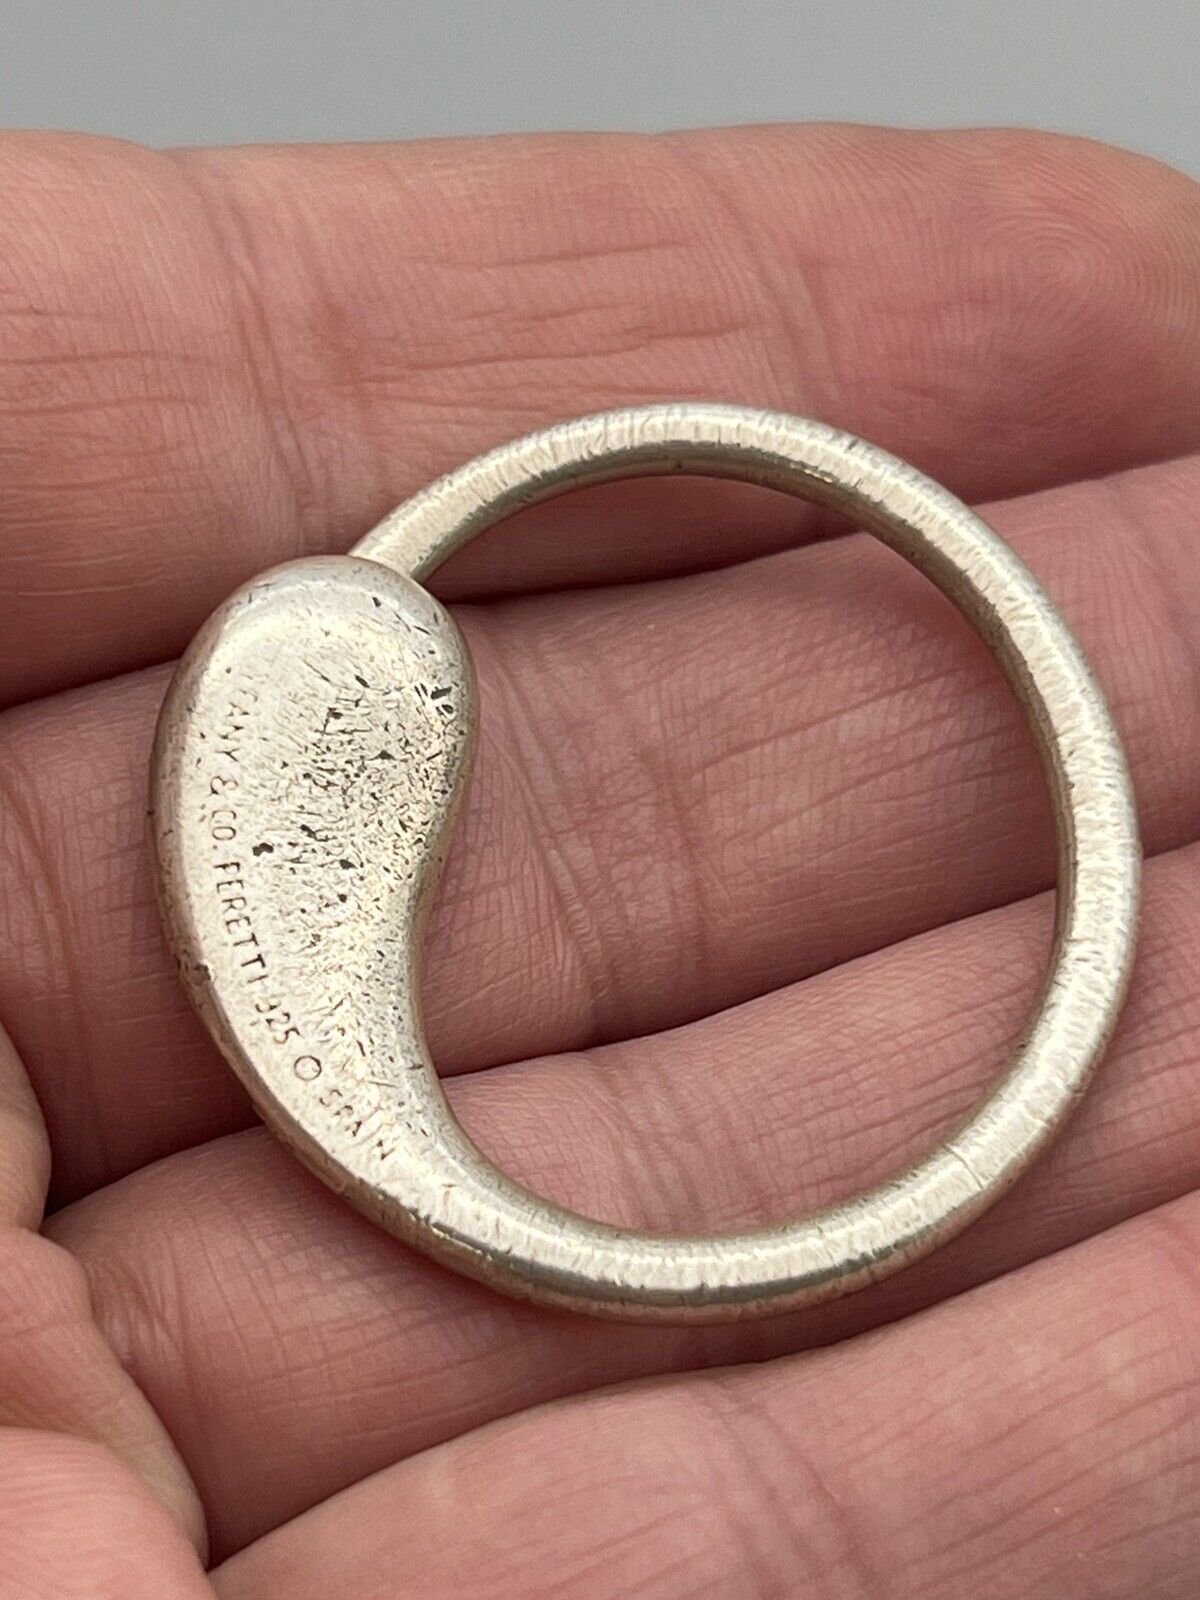 TIFFANY Elsa Peretti Sterling Silver Eternal Circle Key Ring | eBay